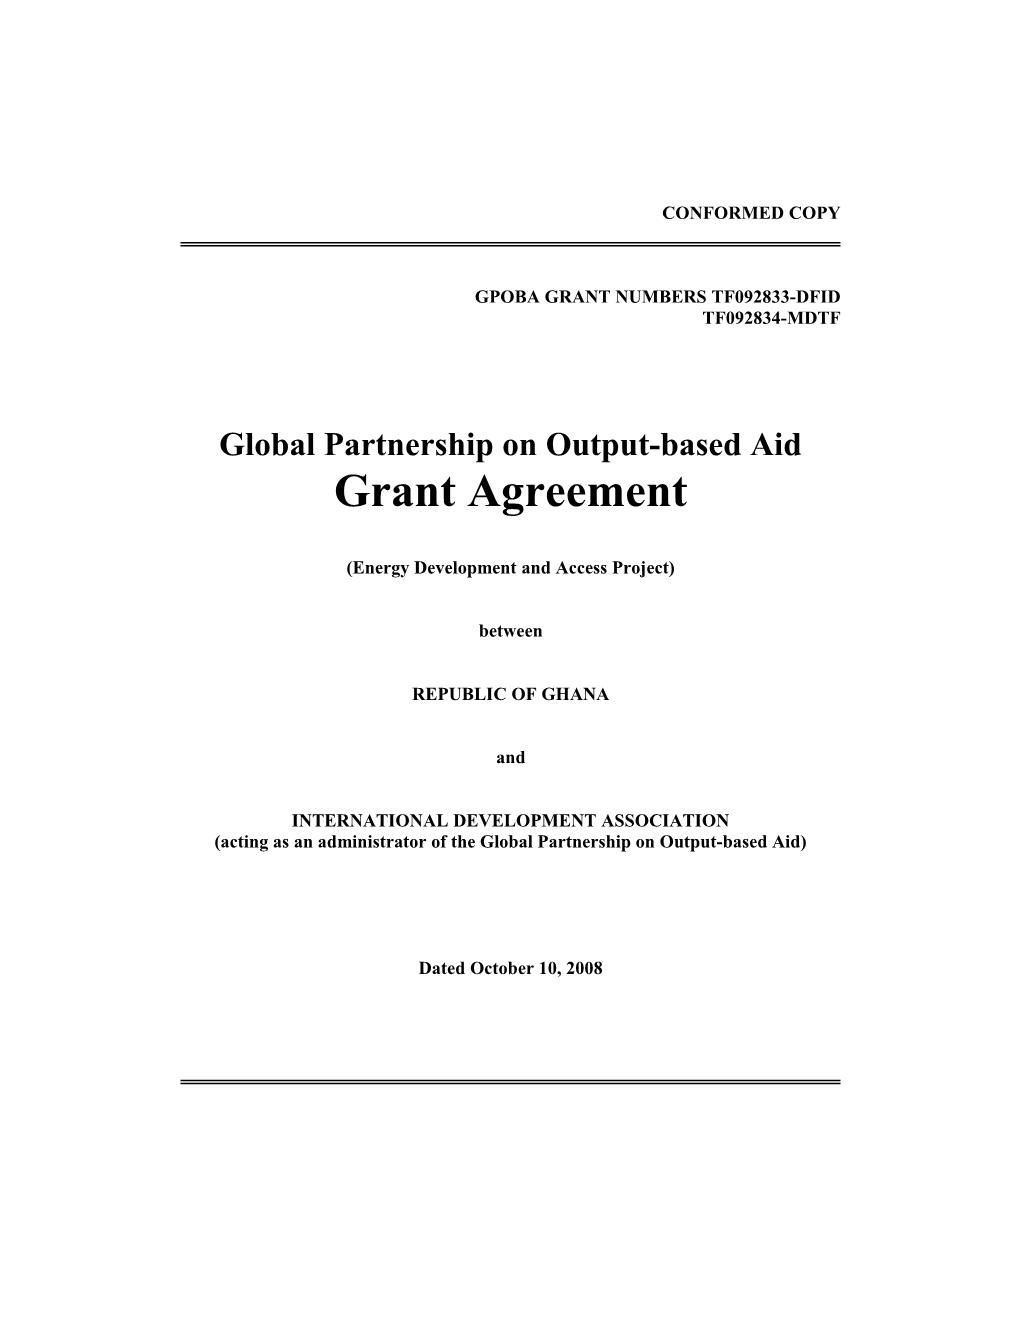 Global Partnership on Output-Based Aid